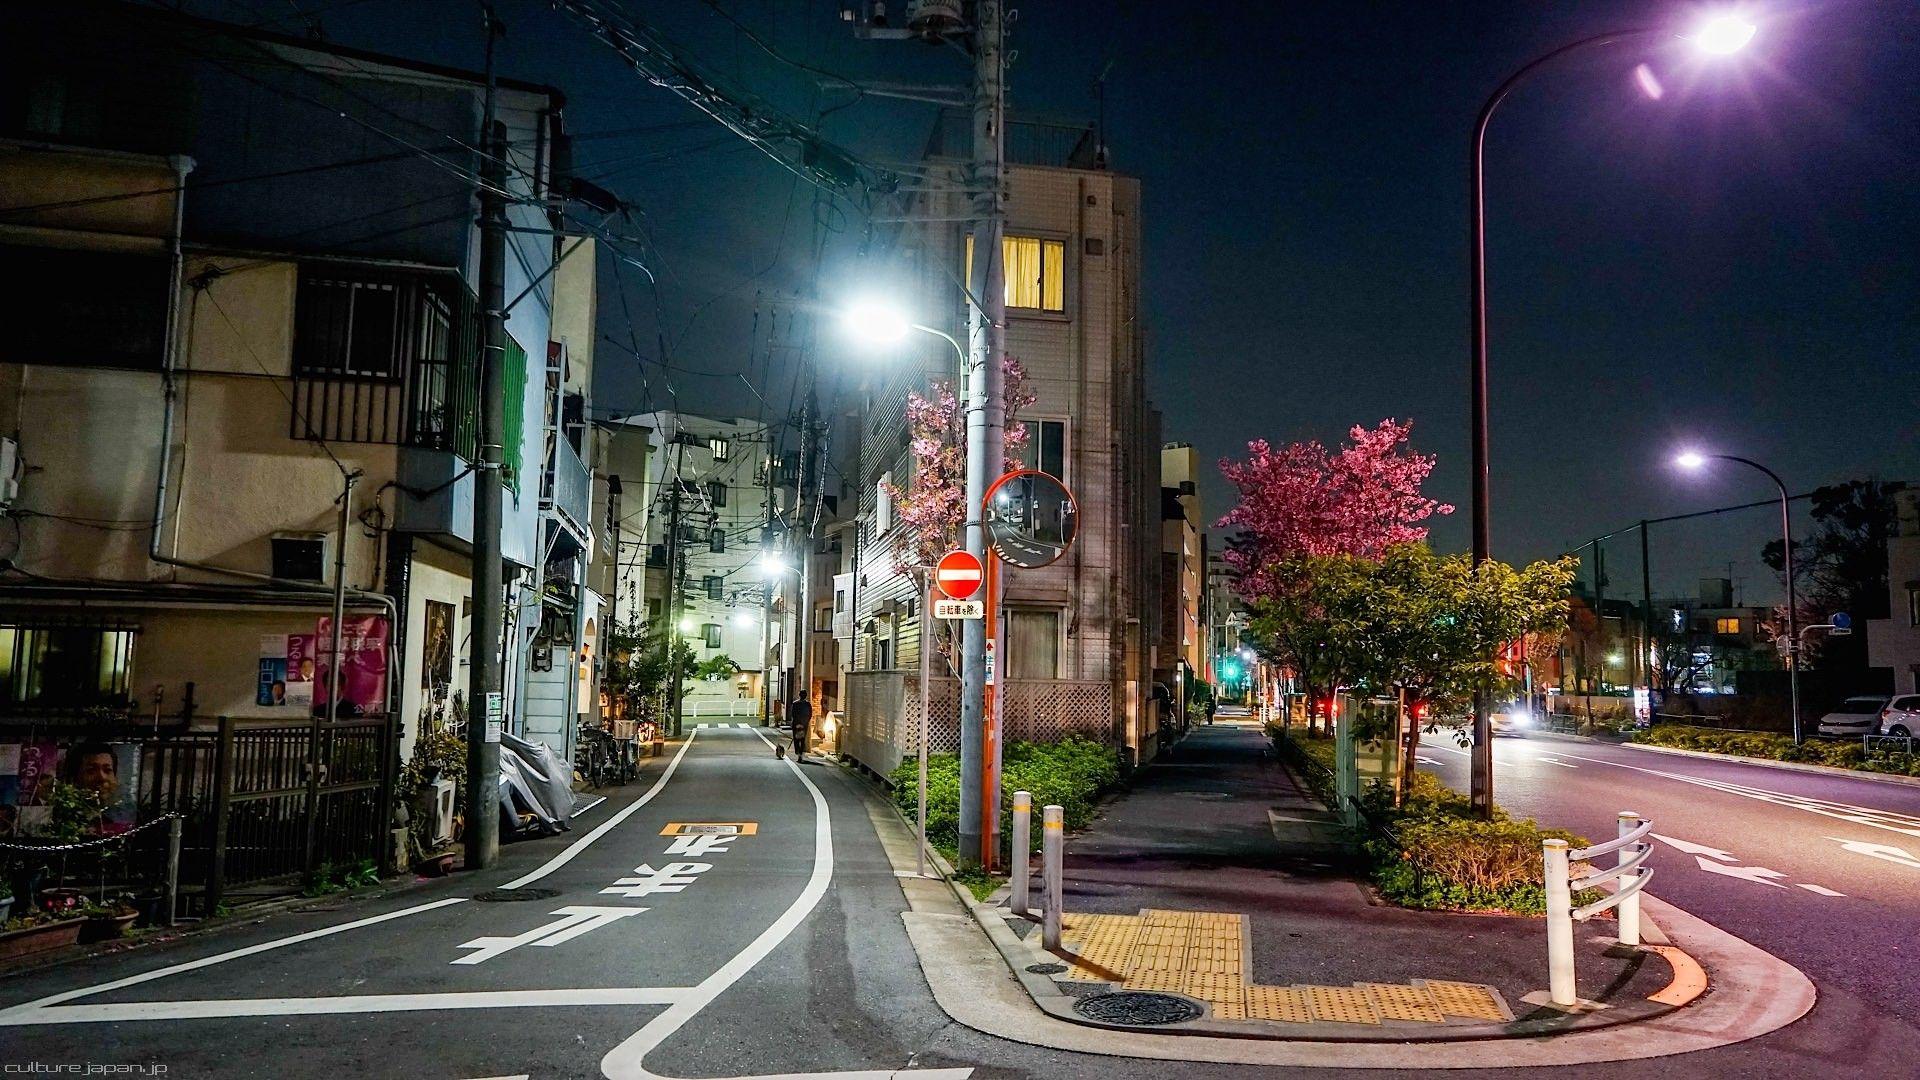 Japan streets Makoto Shinkai 5 Centimeters Per Second shop  1920x1080  Wallpaper  Anime scenery Anime city Street background